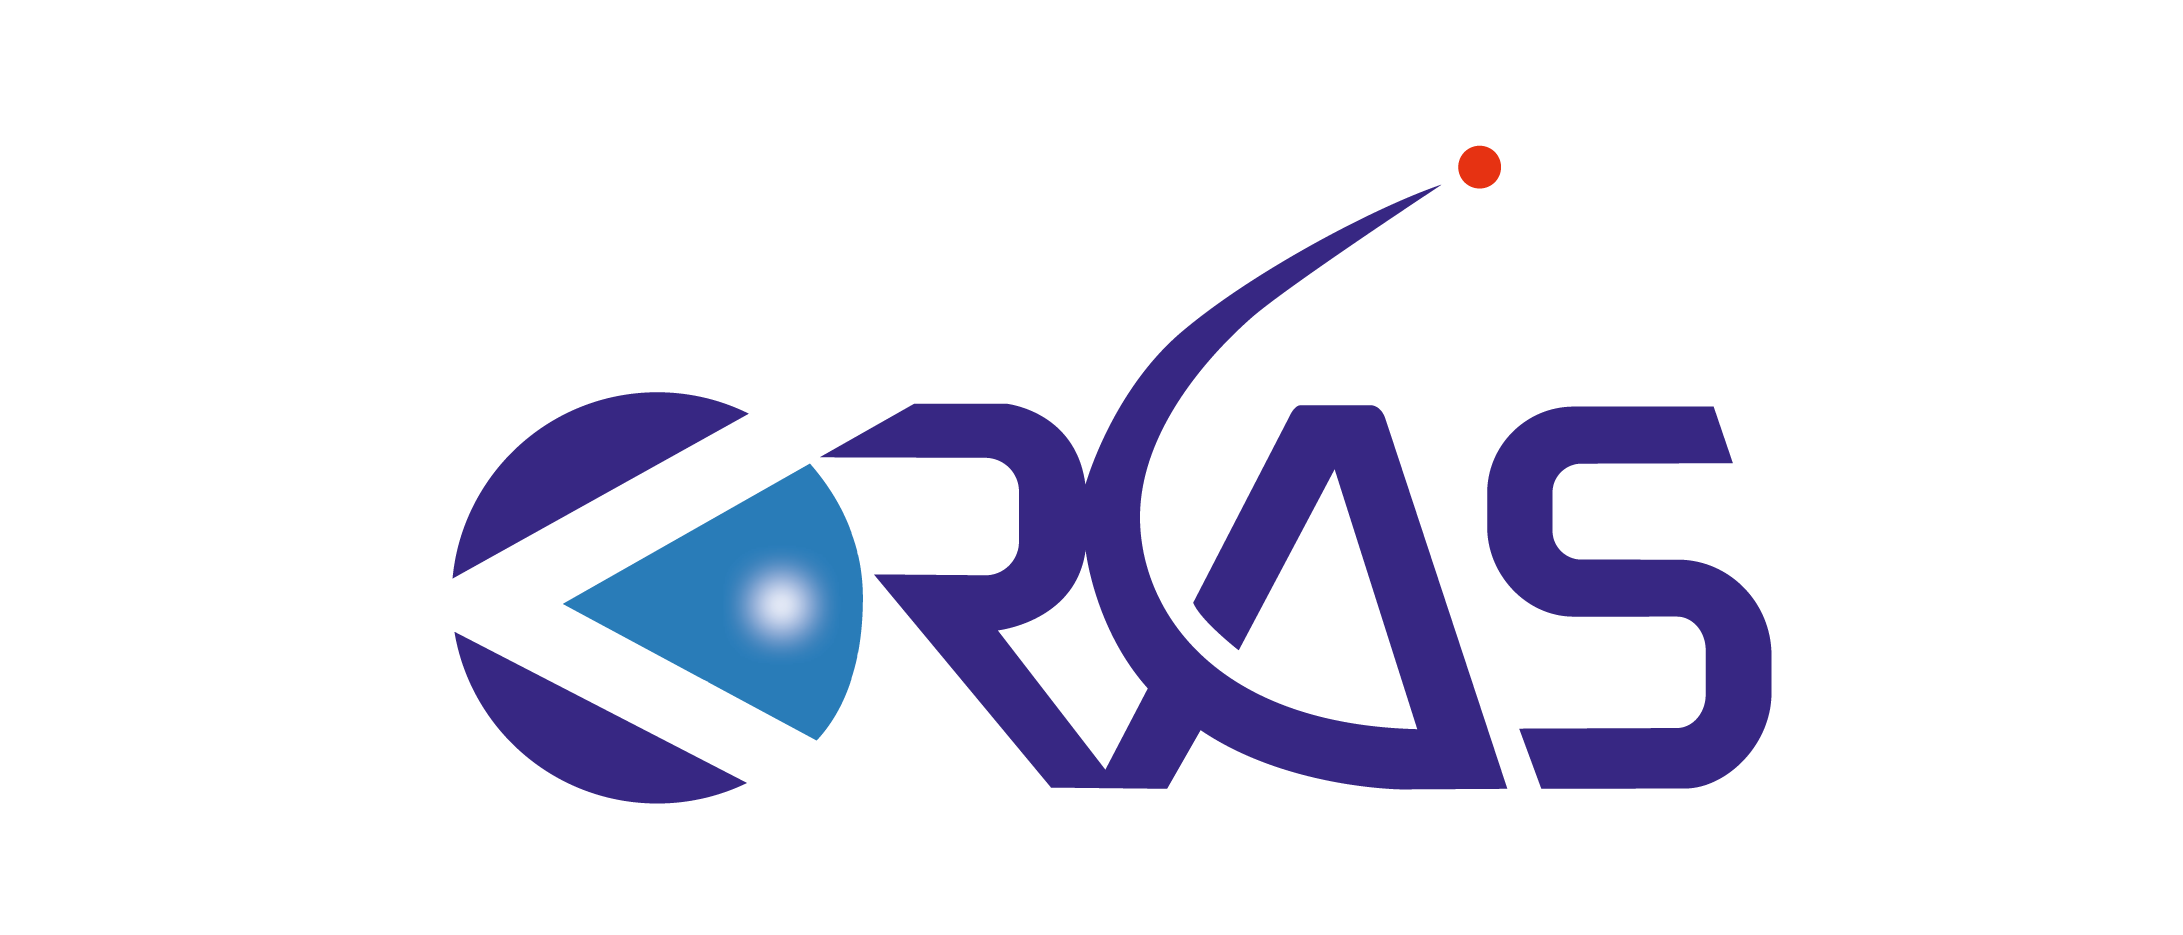 Kras_Logo